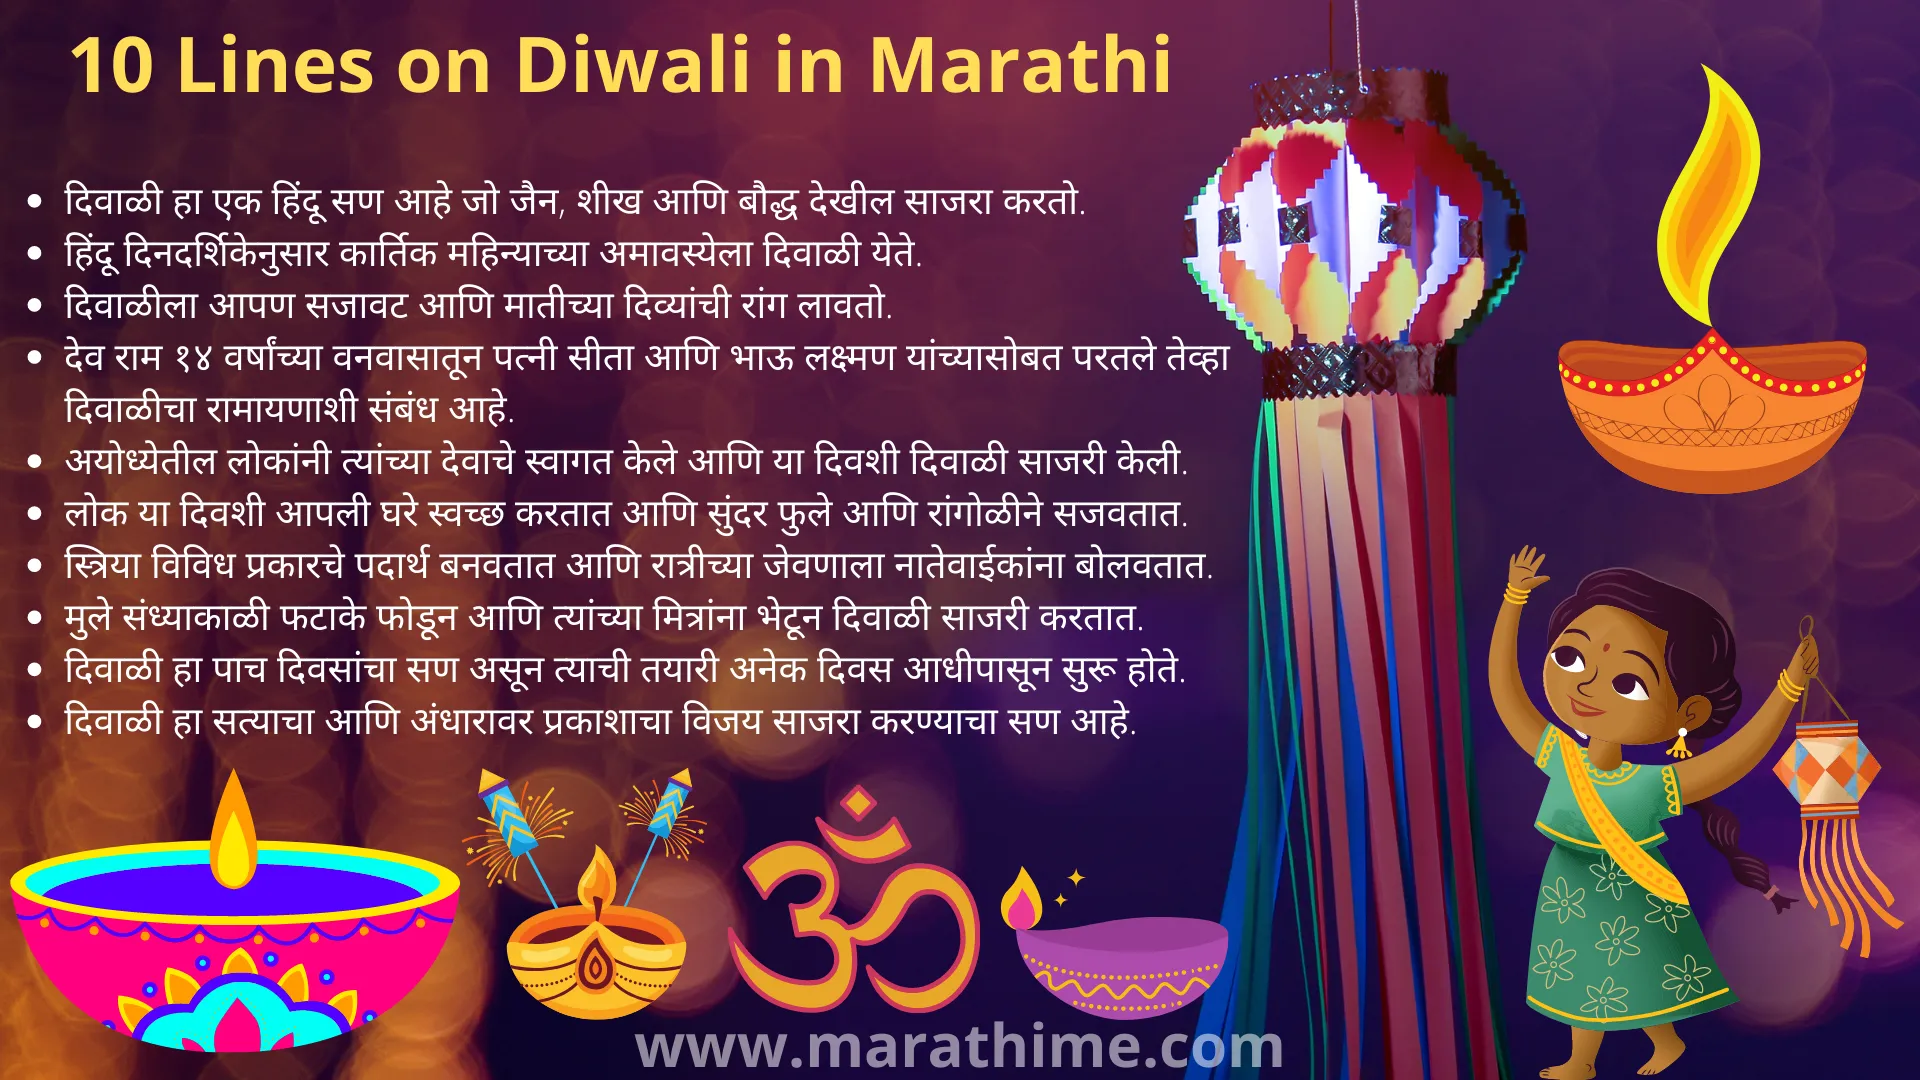 10 Lines on Diwali in Marathi